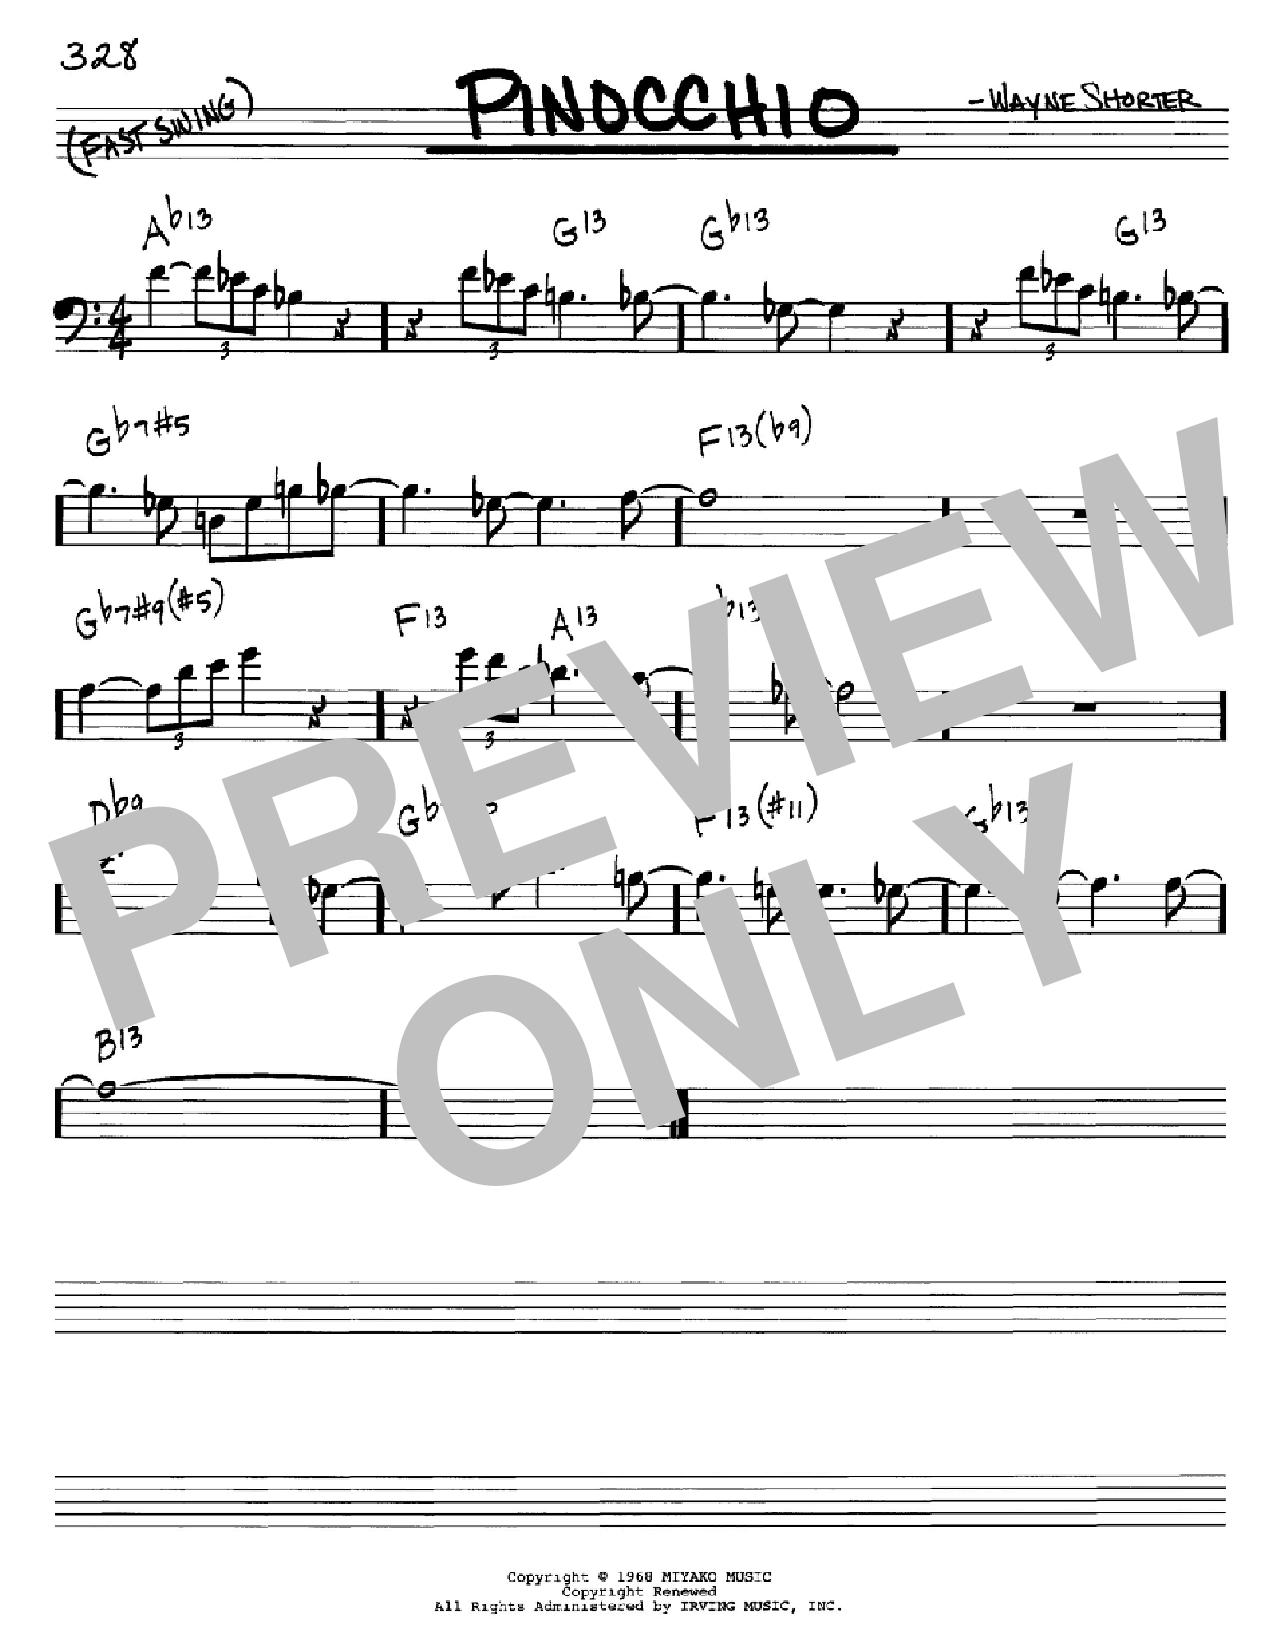 Download Wayne Shorter Pinocchio Sheet Music